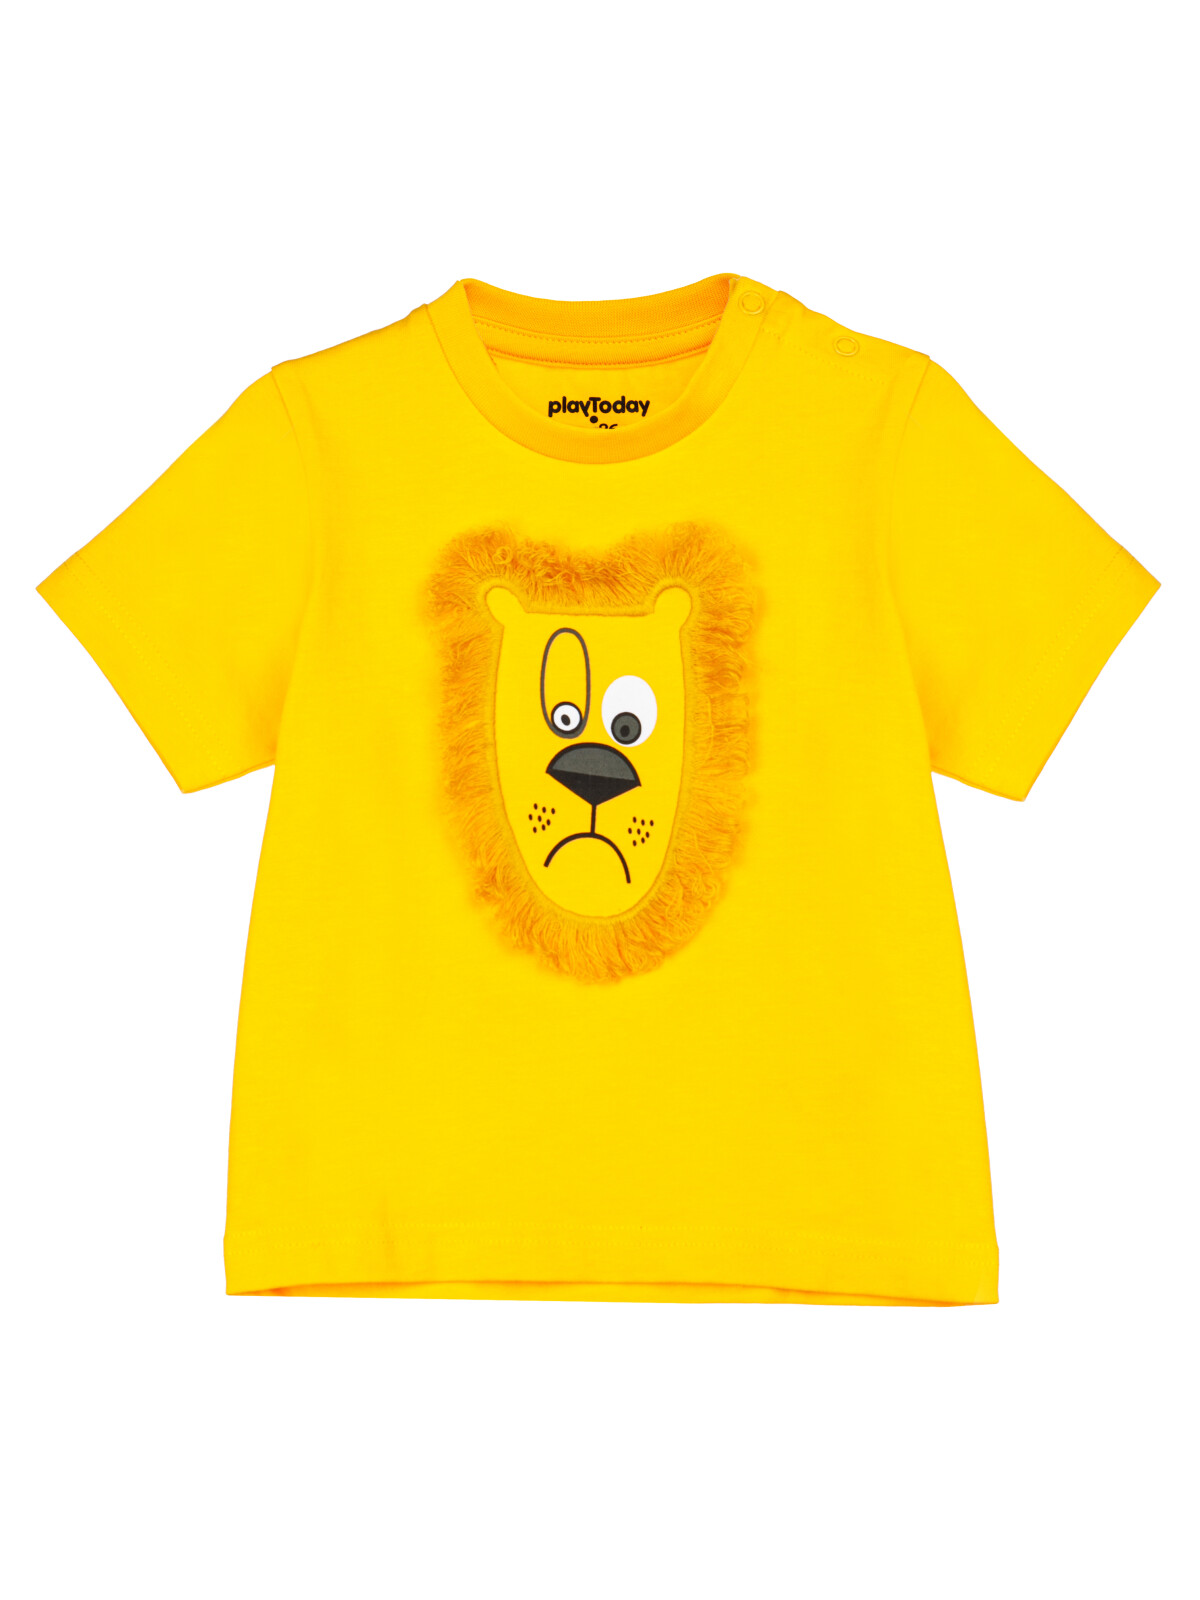 Фуфайка детская (футболка) PlayToday 12419132, жёлтый, 92